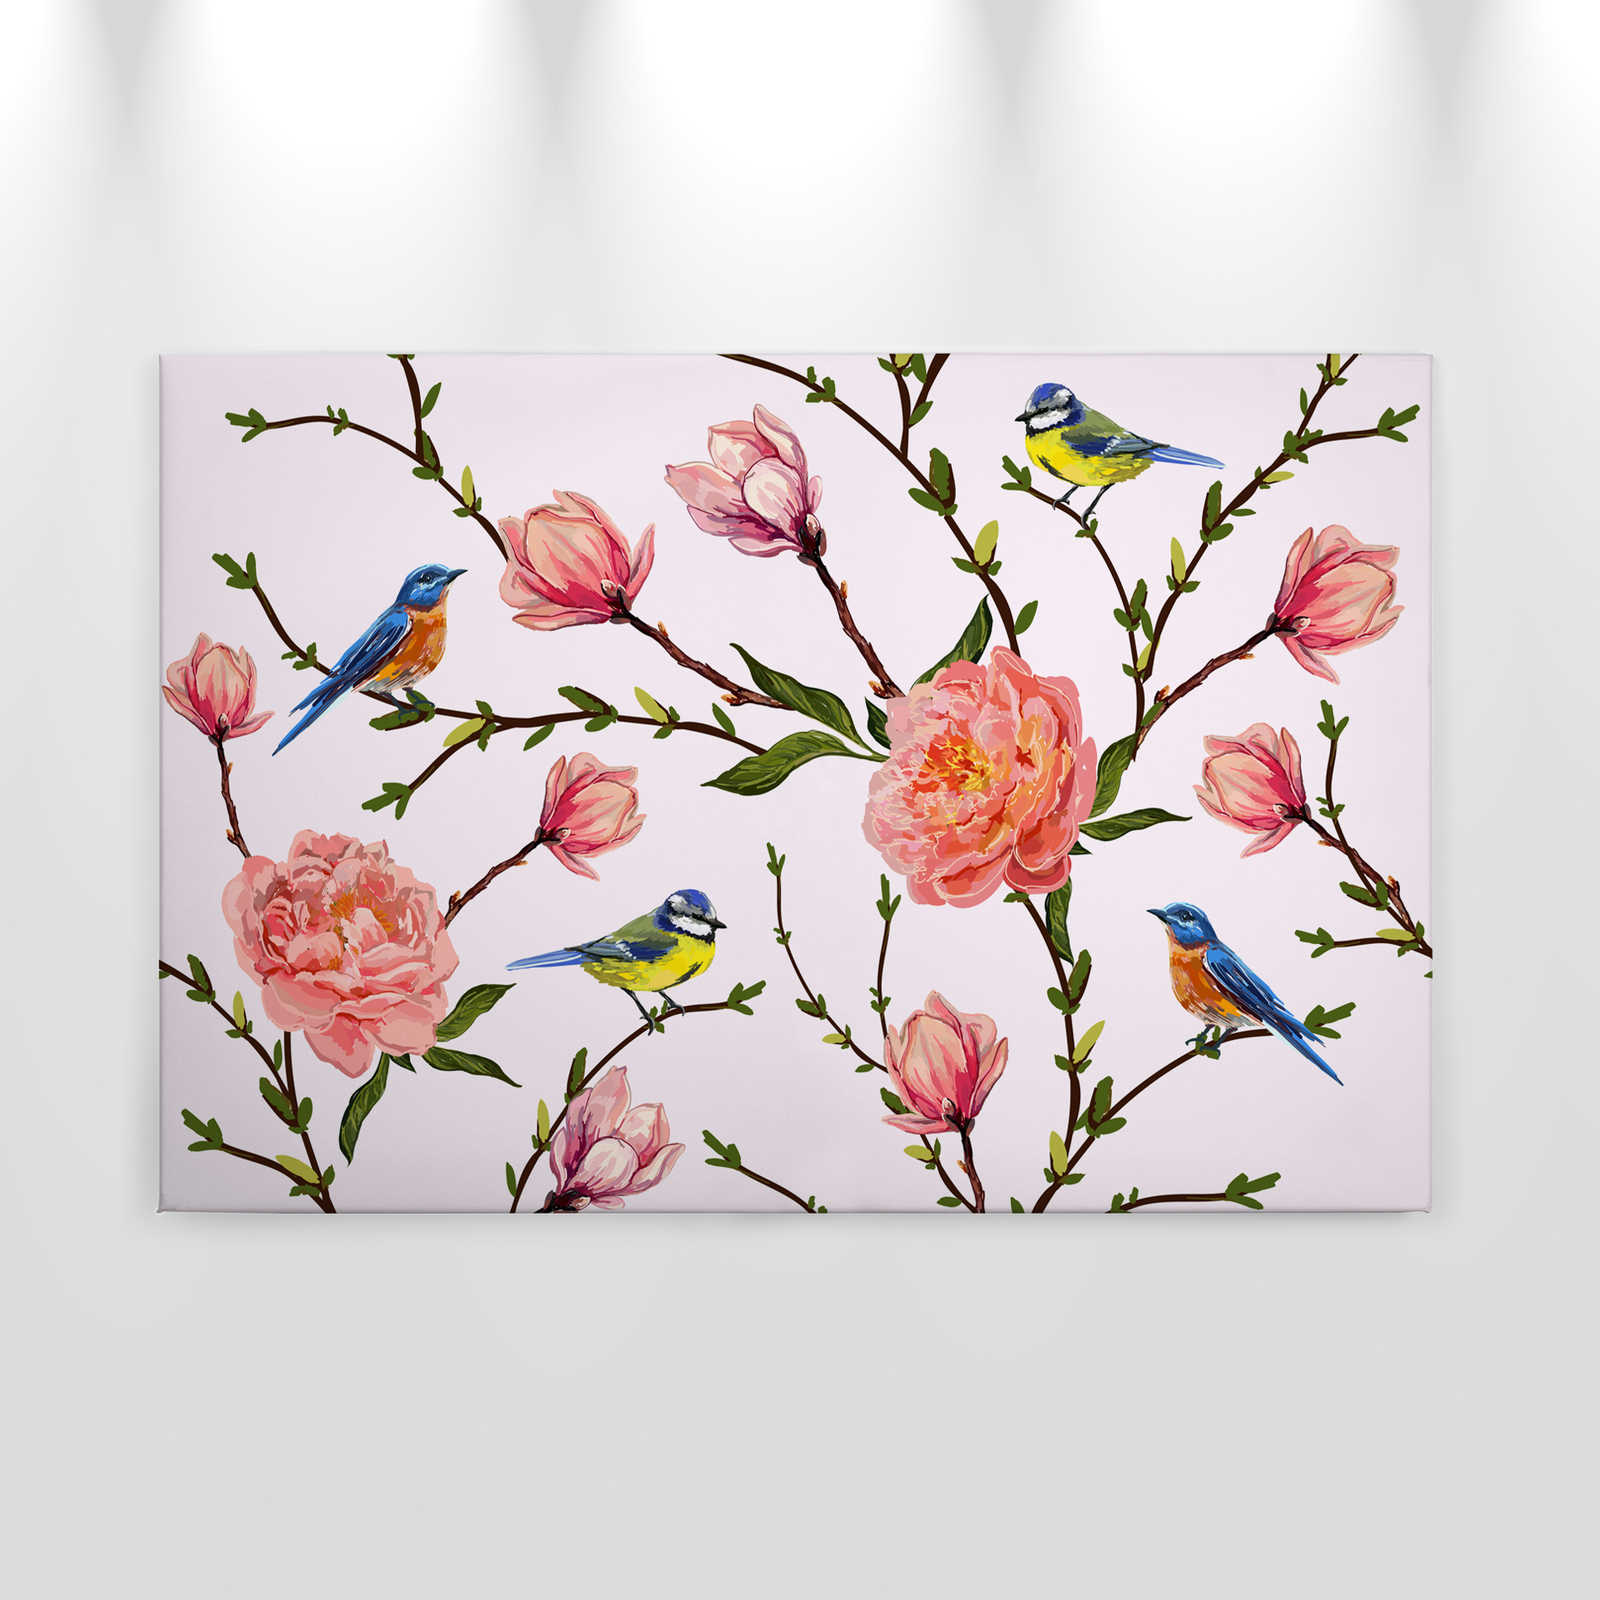             Lienzo Pájaros y flores minimalista - 0,90 m x 0,60 m
        